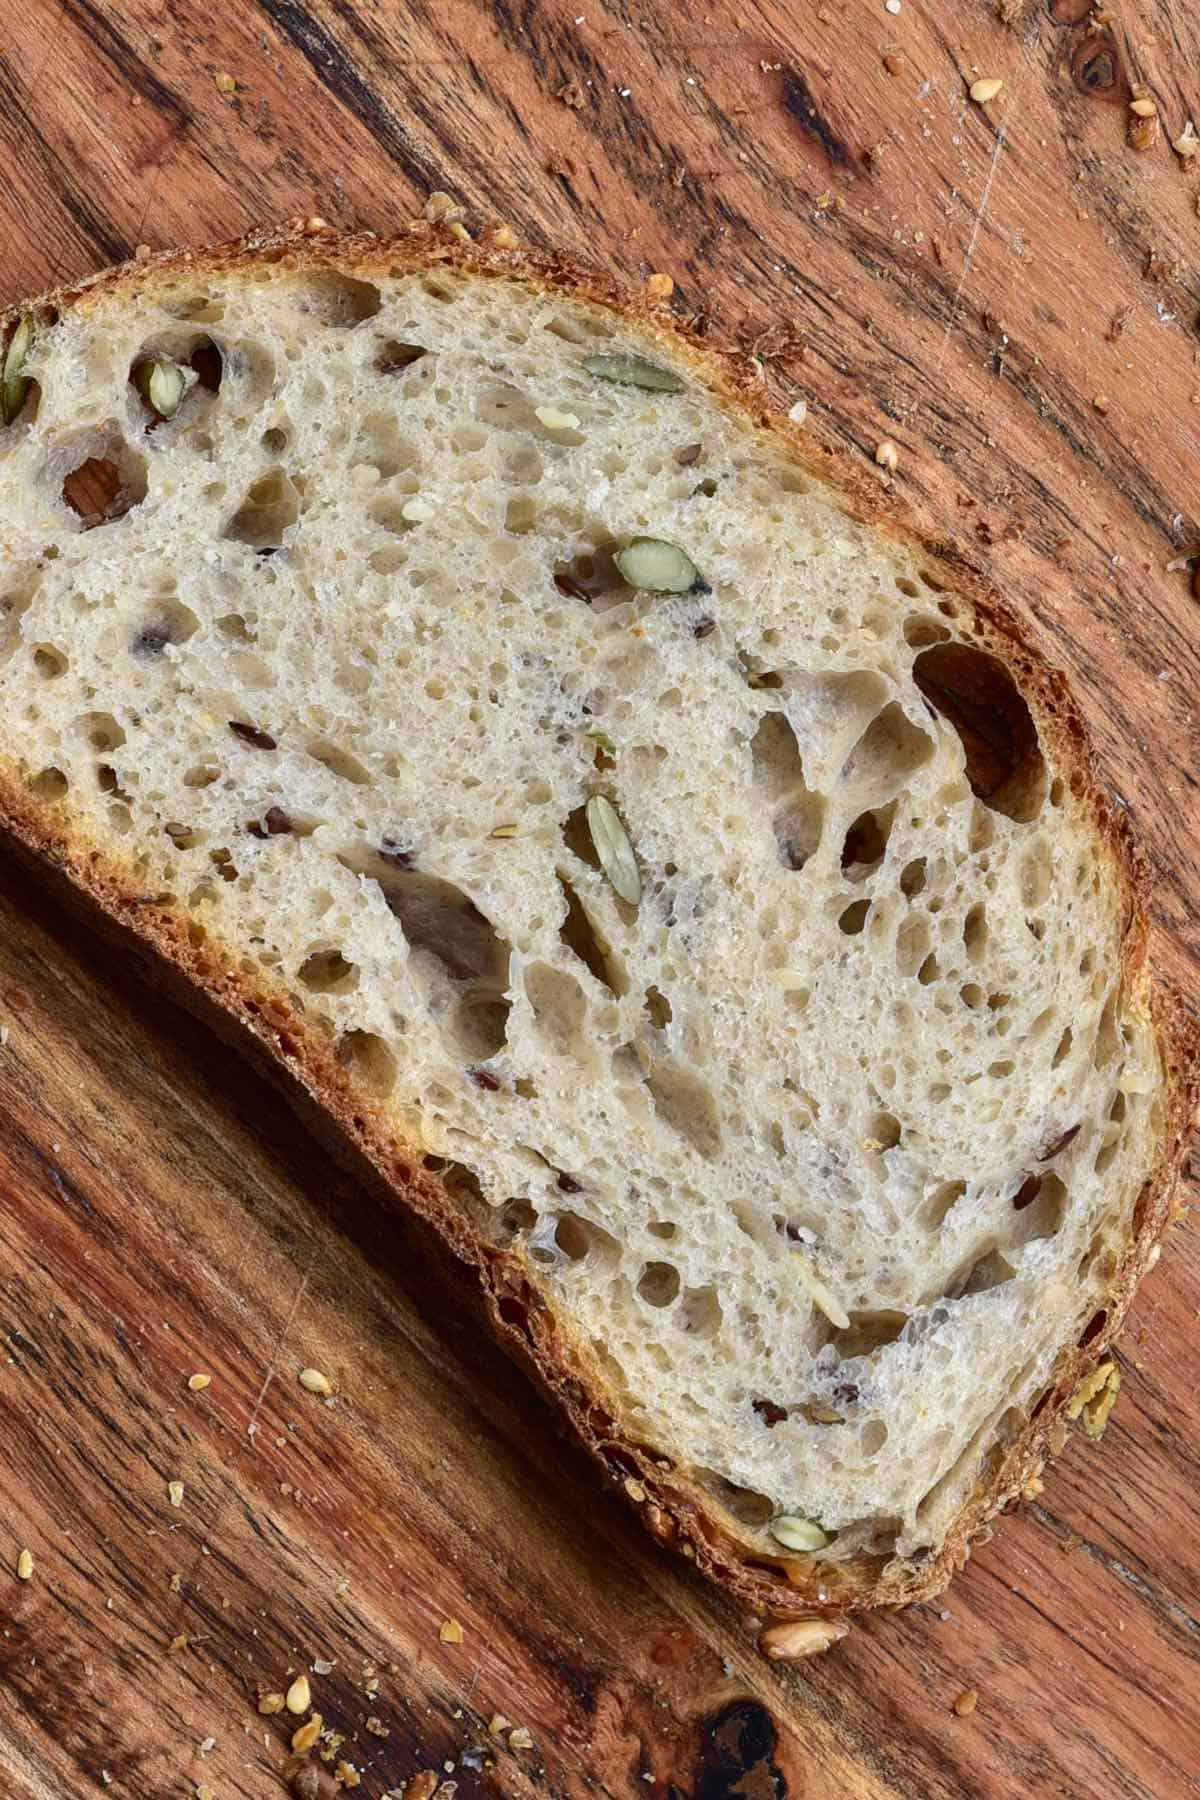 A piece of bread